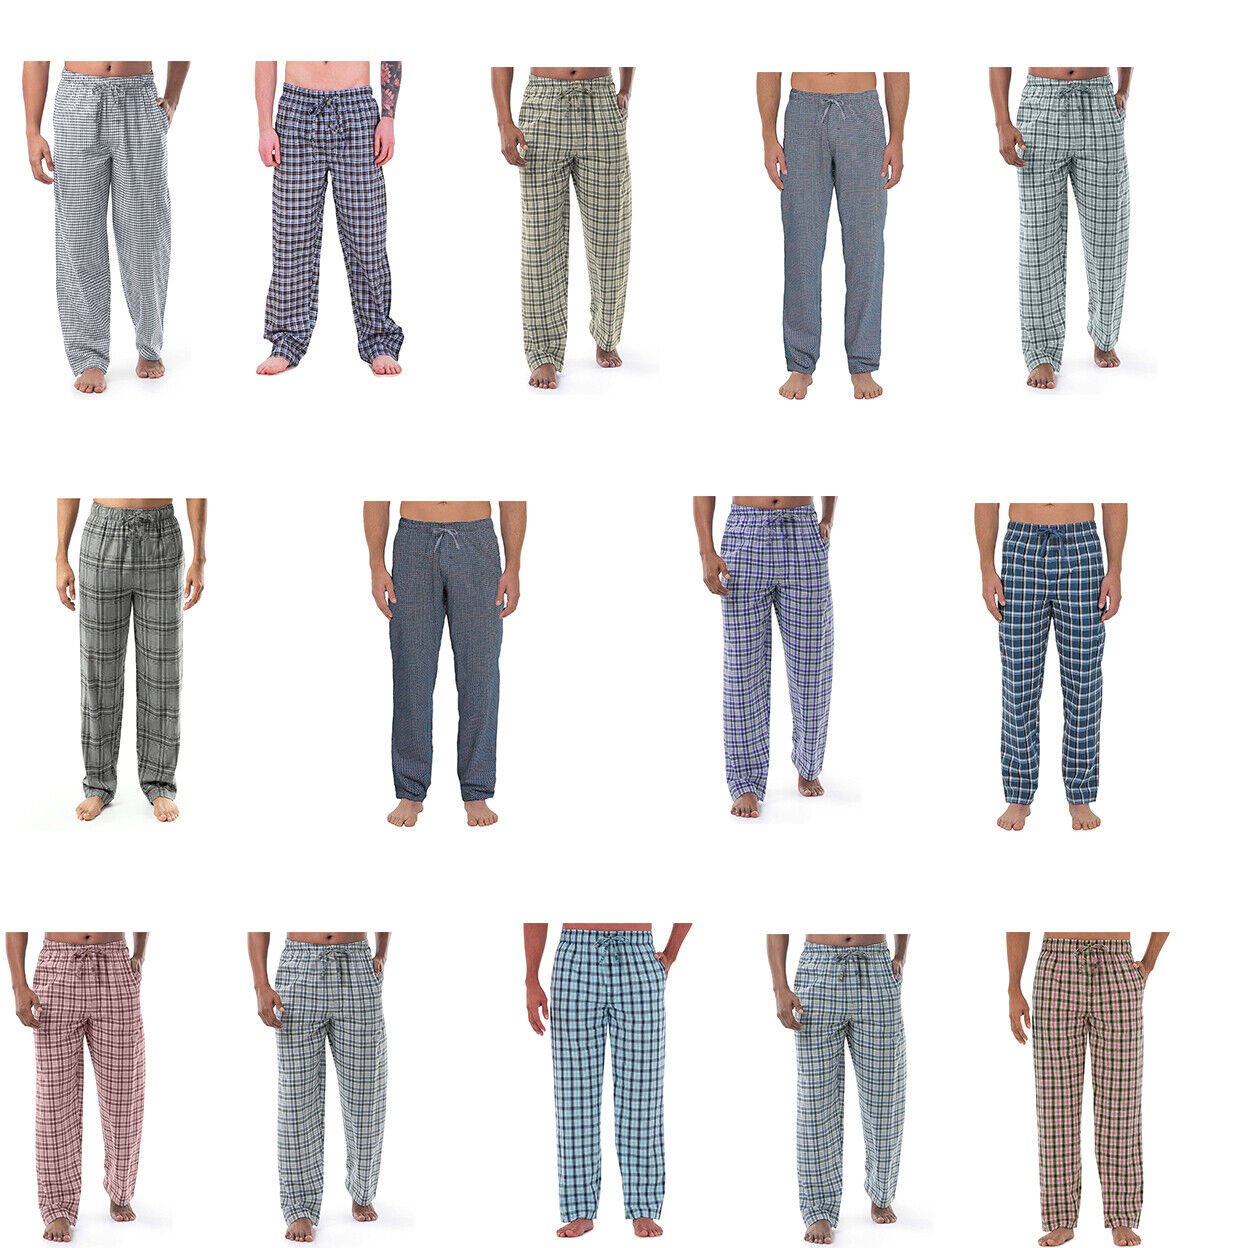 Men's Ultra-Soft Plaid Cotton Jersey Knit Comfy Sleep Lounge Pajama Pants - Black, Xx-large